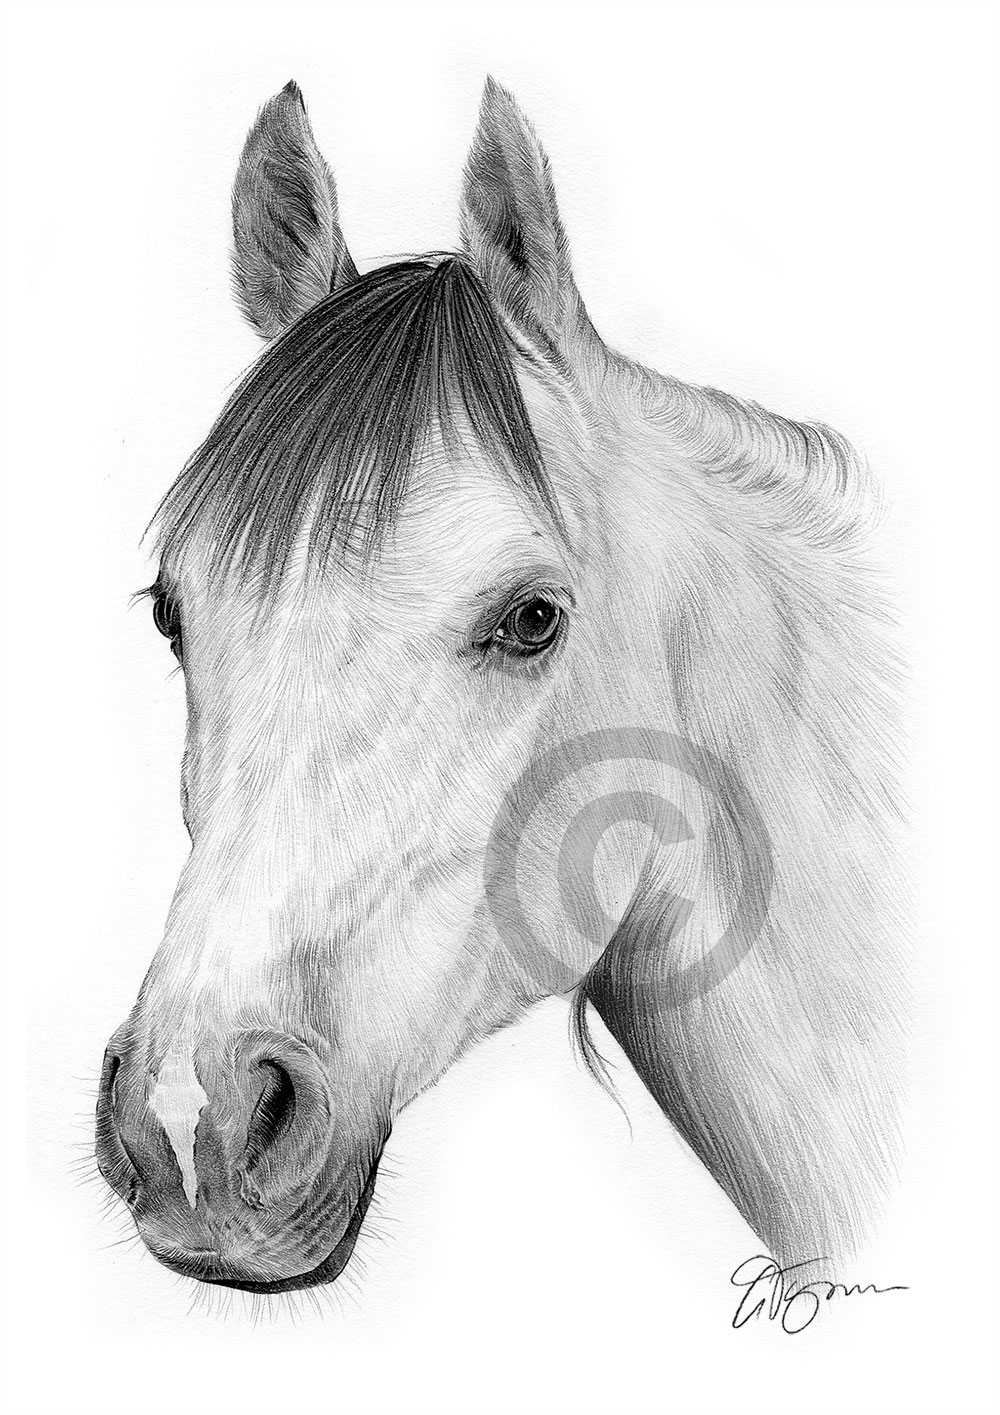 Pencil drawing of an Arab stallion by artist Gary Tymon